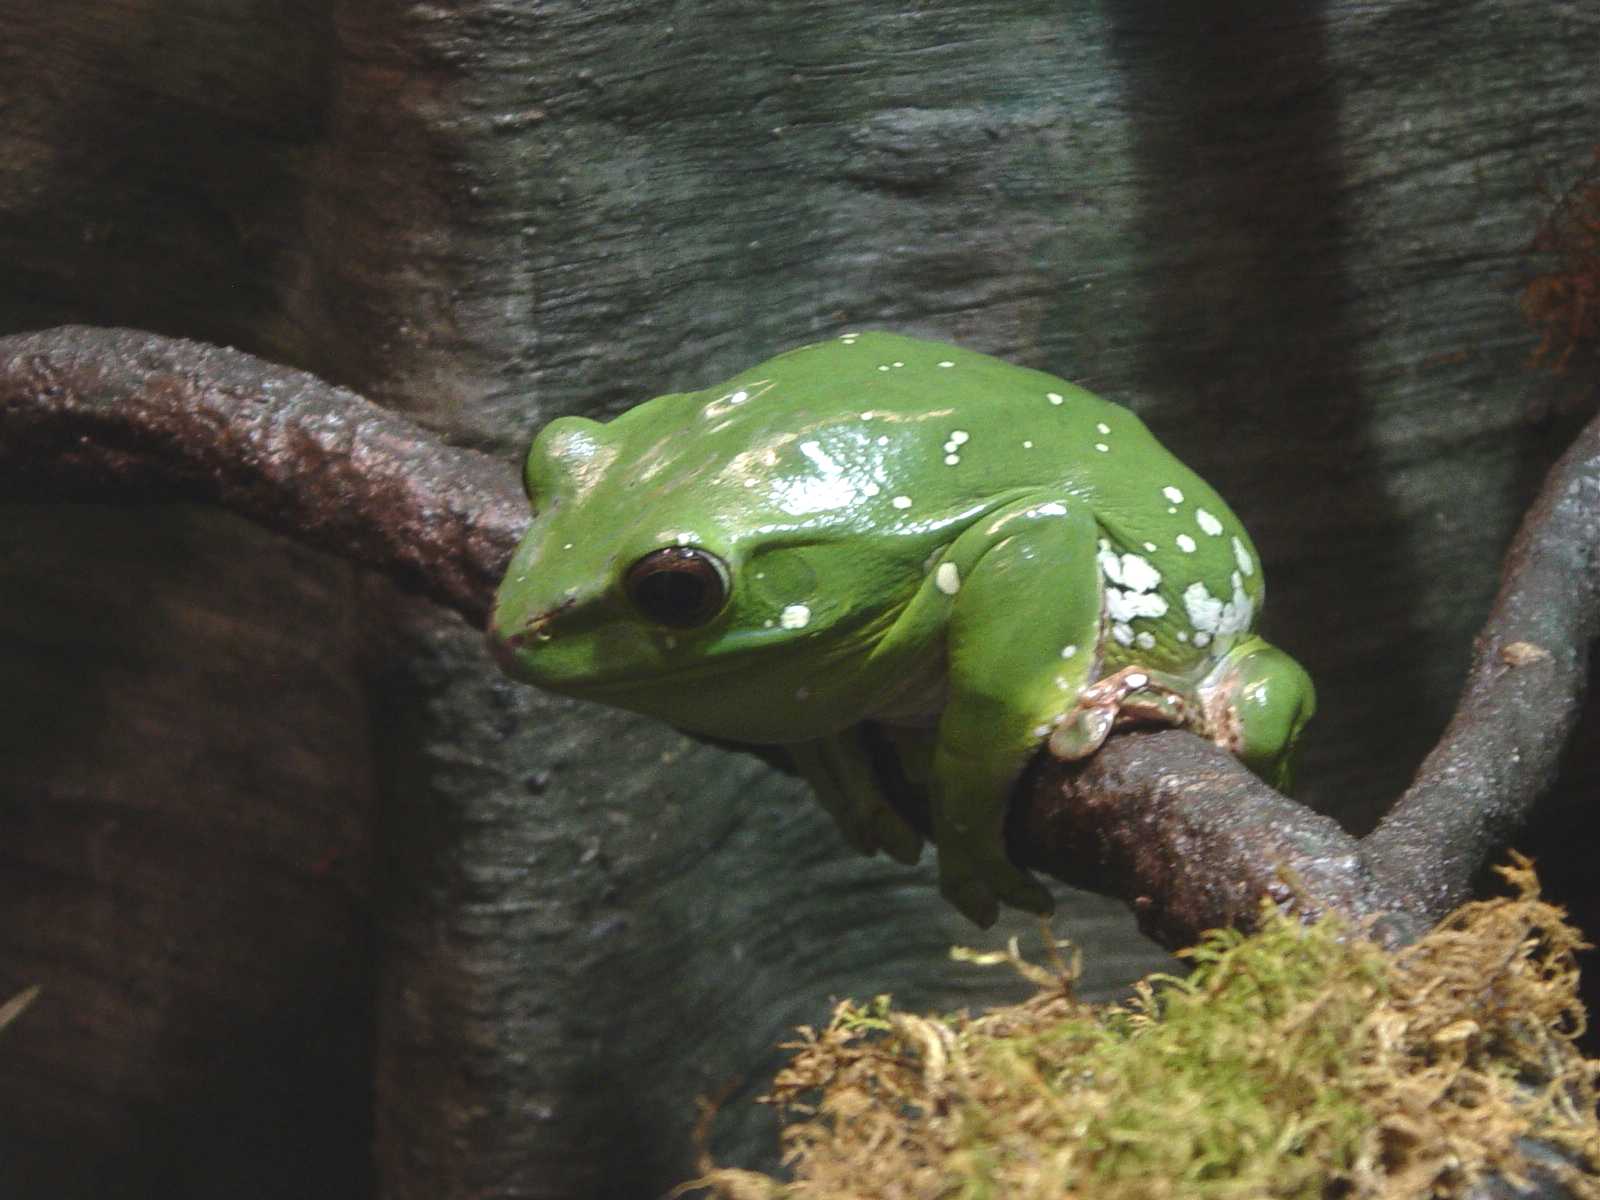 The frog exhibit